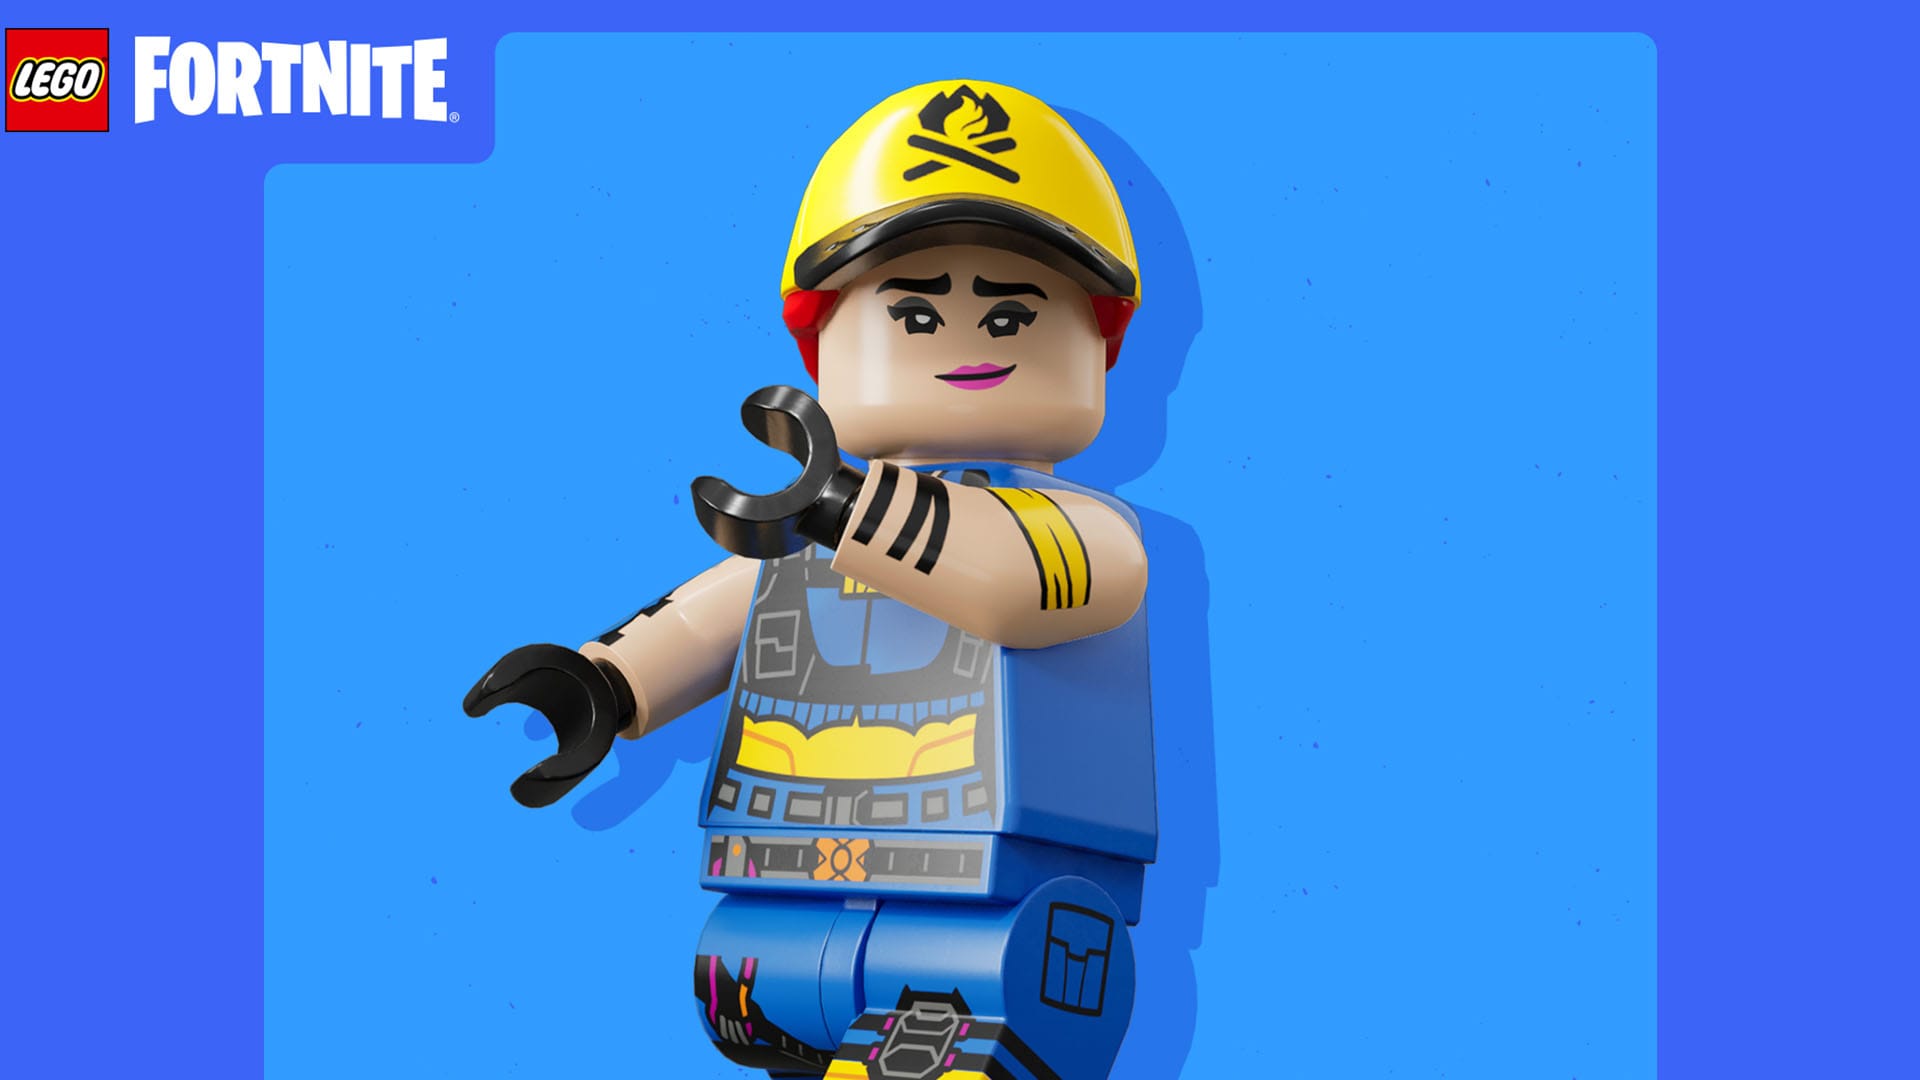 LEGO Fortnite Gets New Update Featuring Several Tweaks